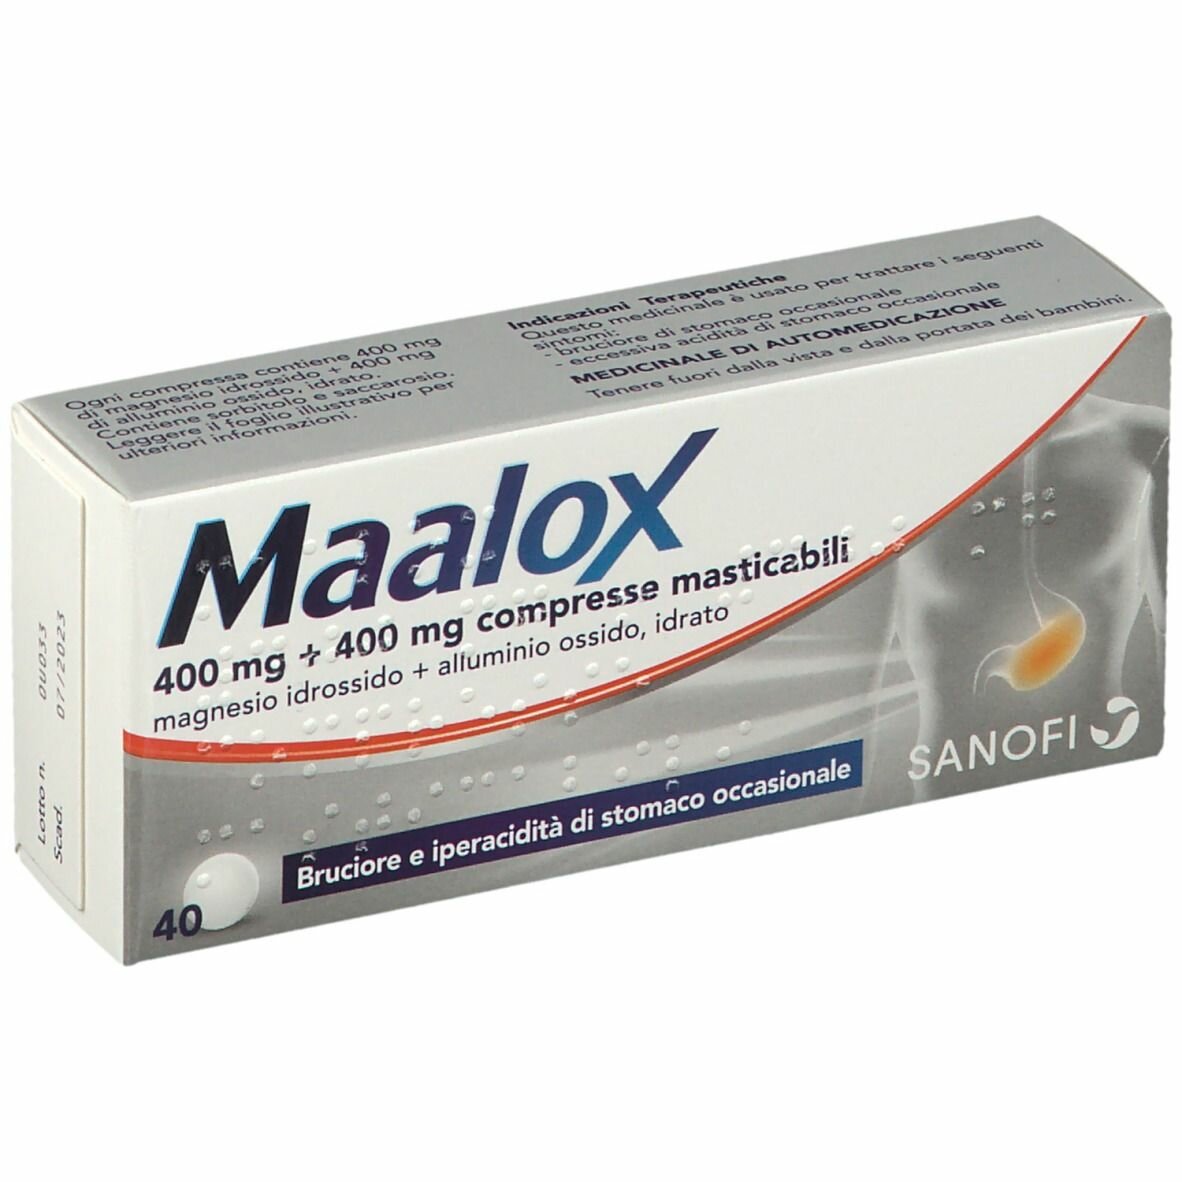 Maalox compresse masticabili 40 antiacido 400 mg + 400 mg img